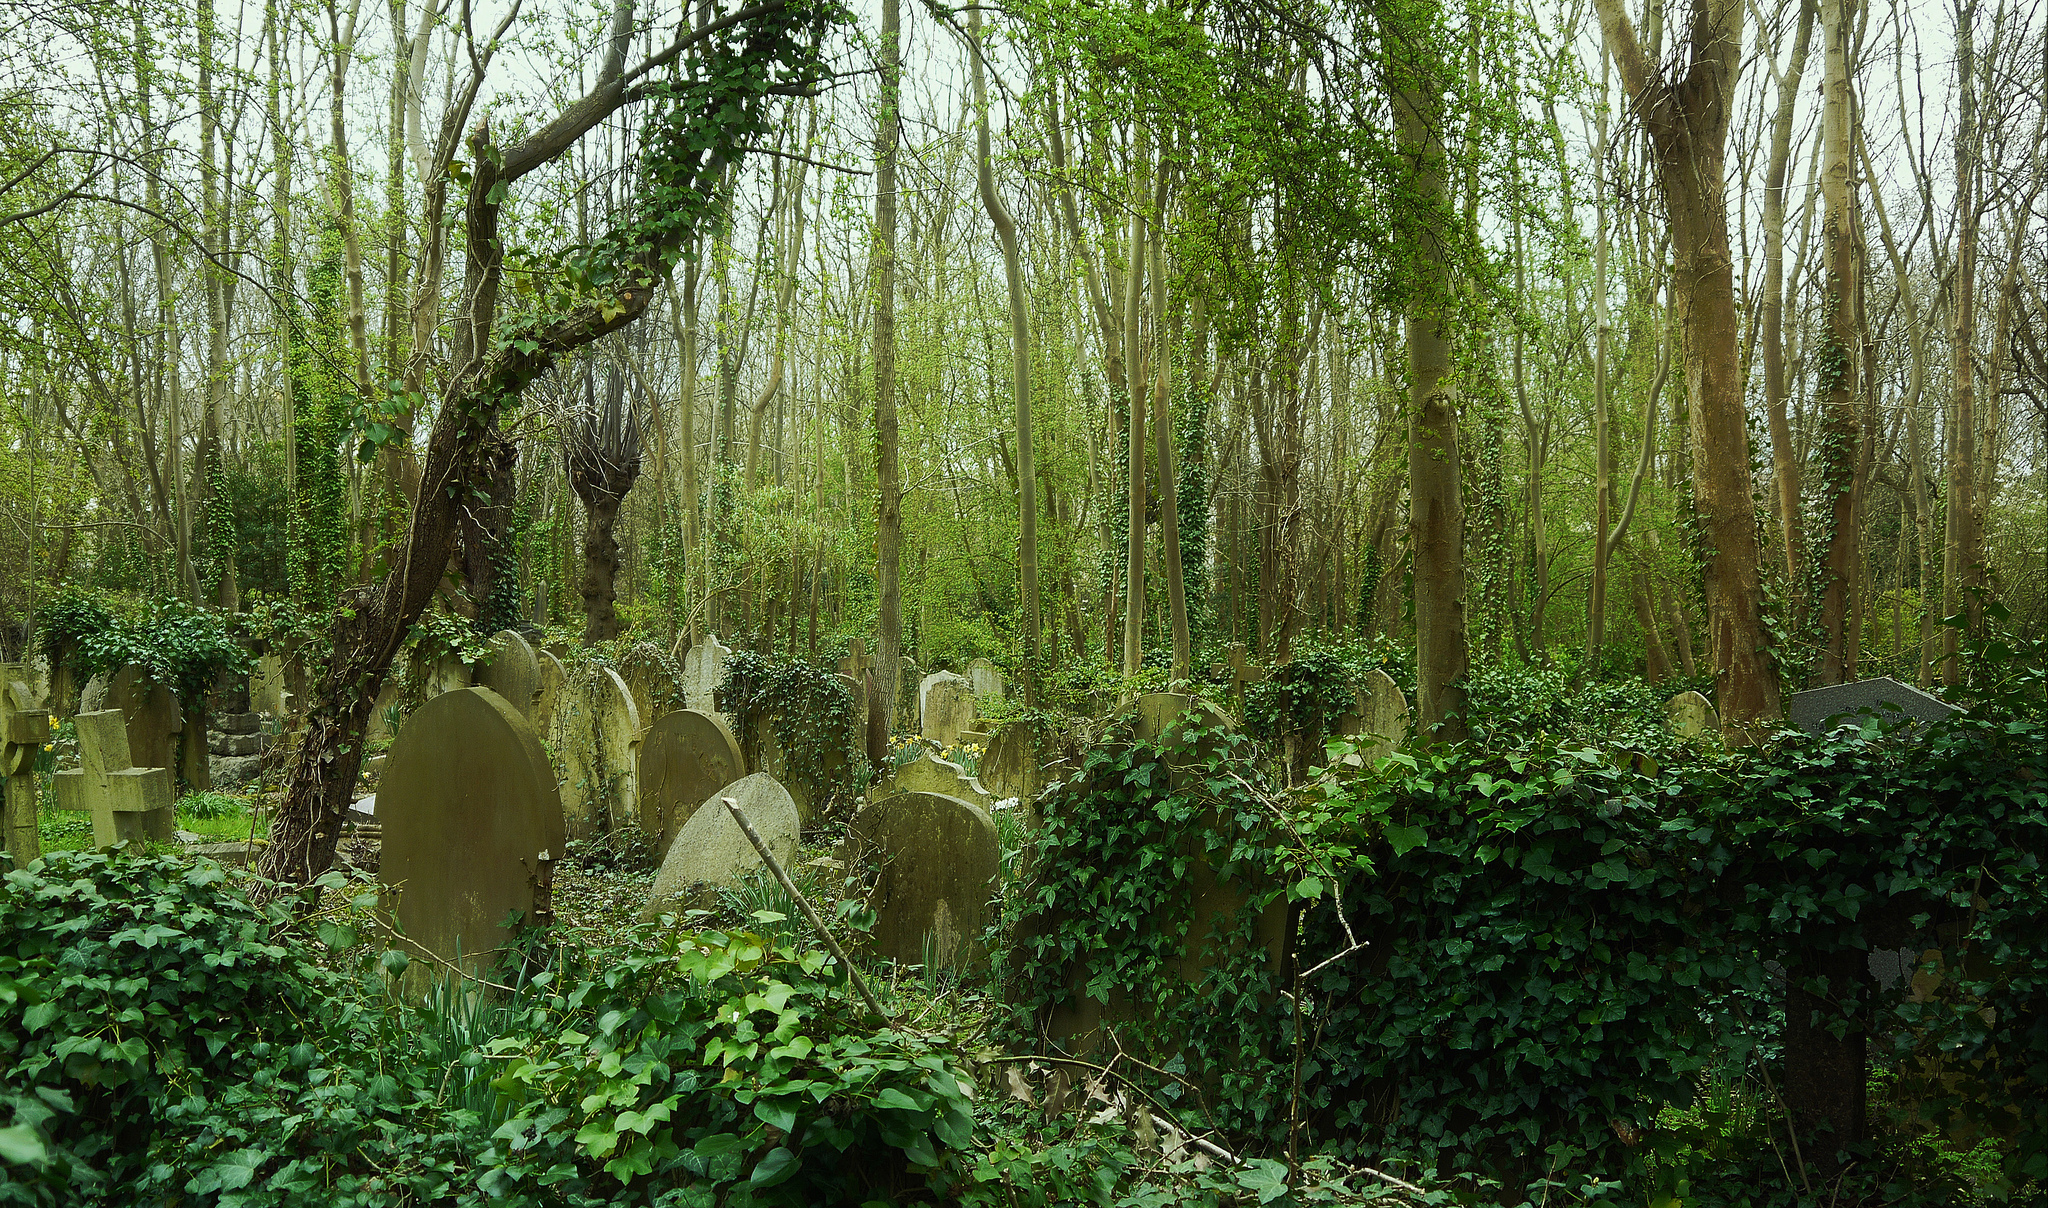 london cemeteries to visit